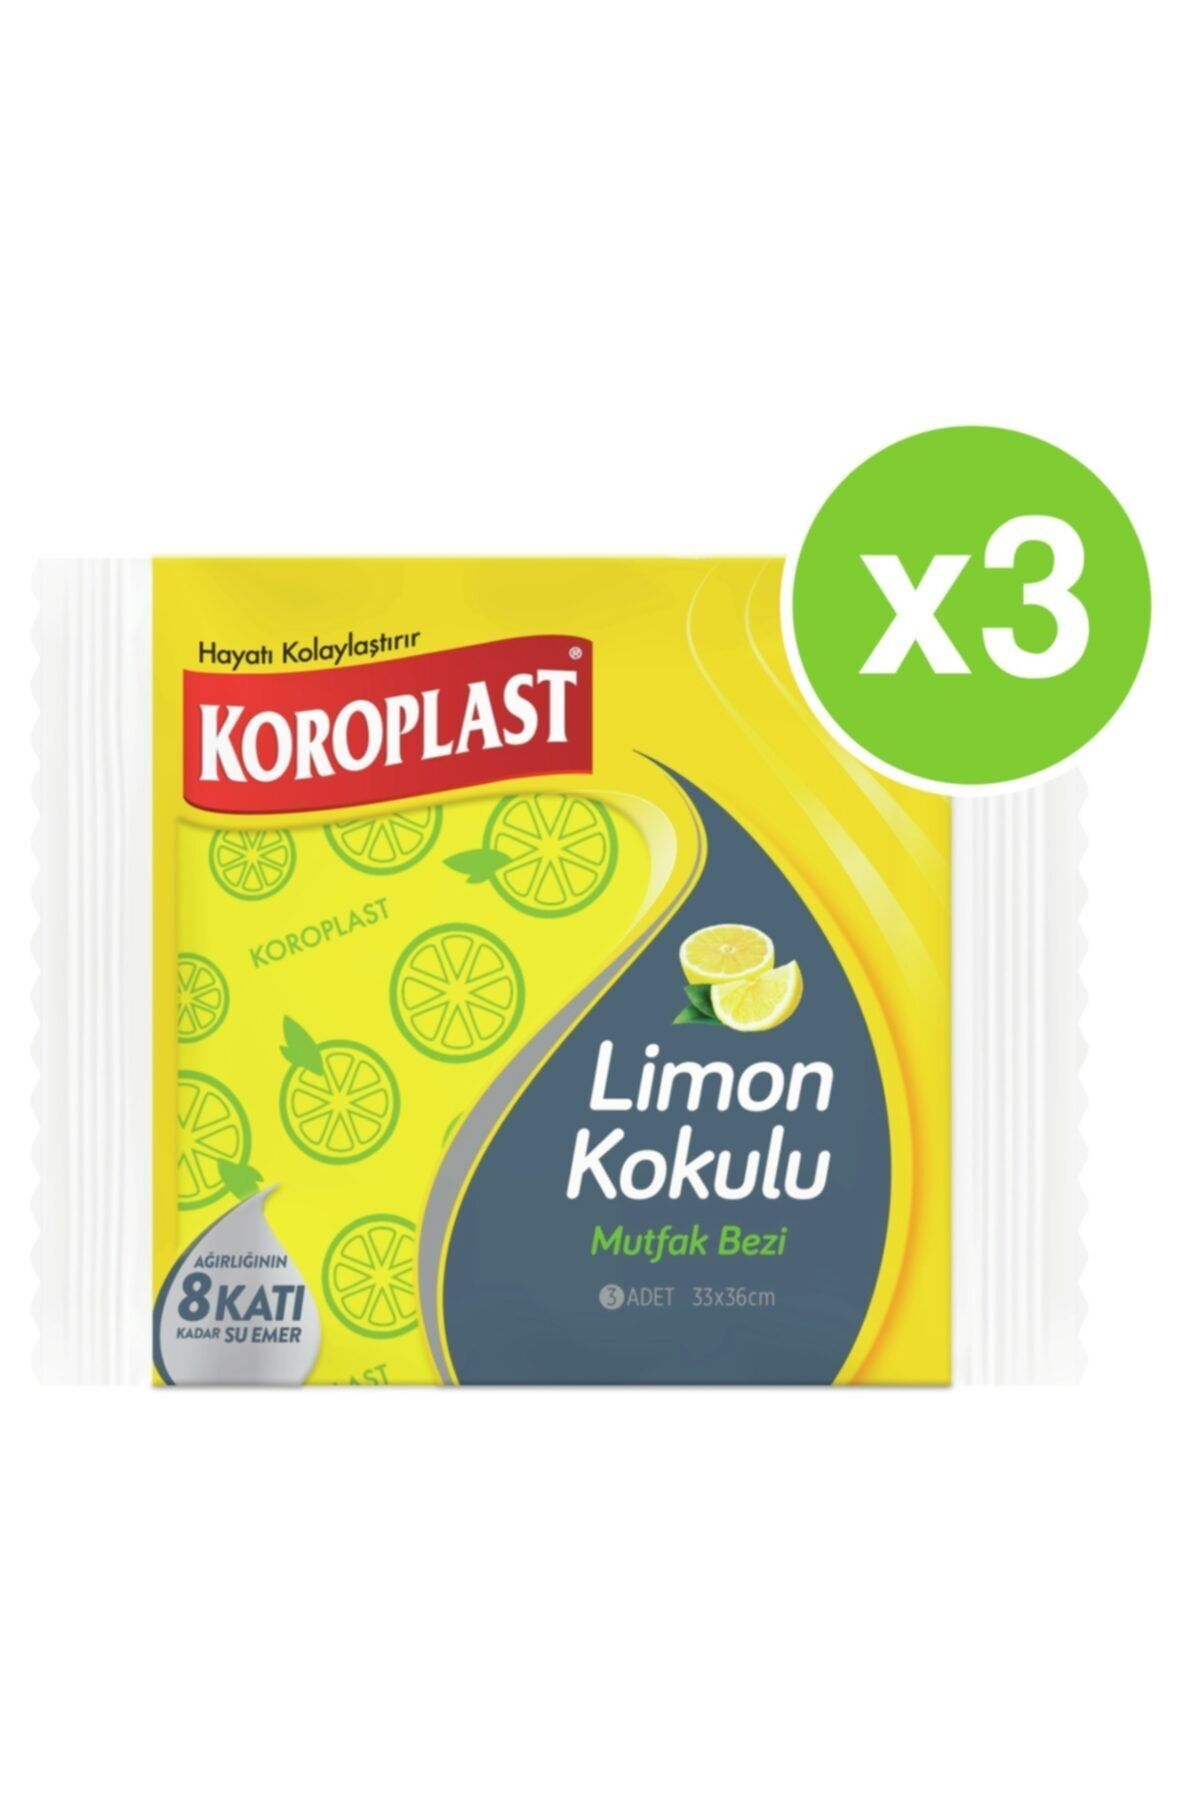 Koroplast Limon Kokulu Mutfak Bezi 3lü X 3 Paket